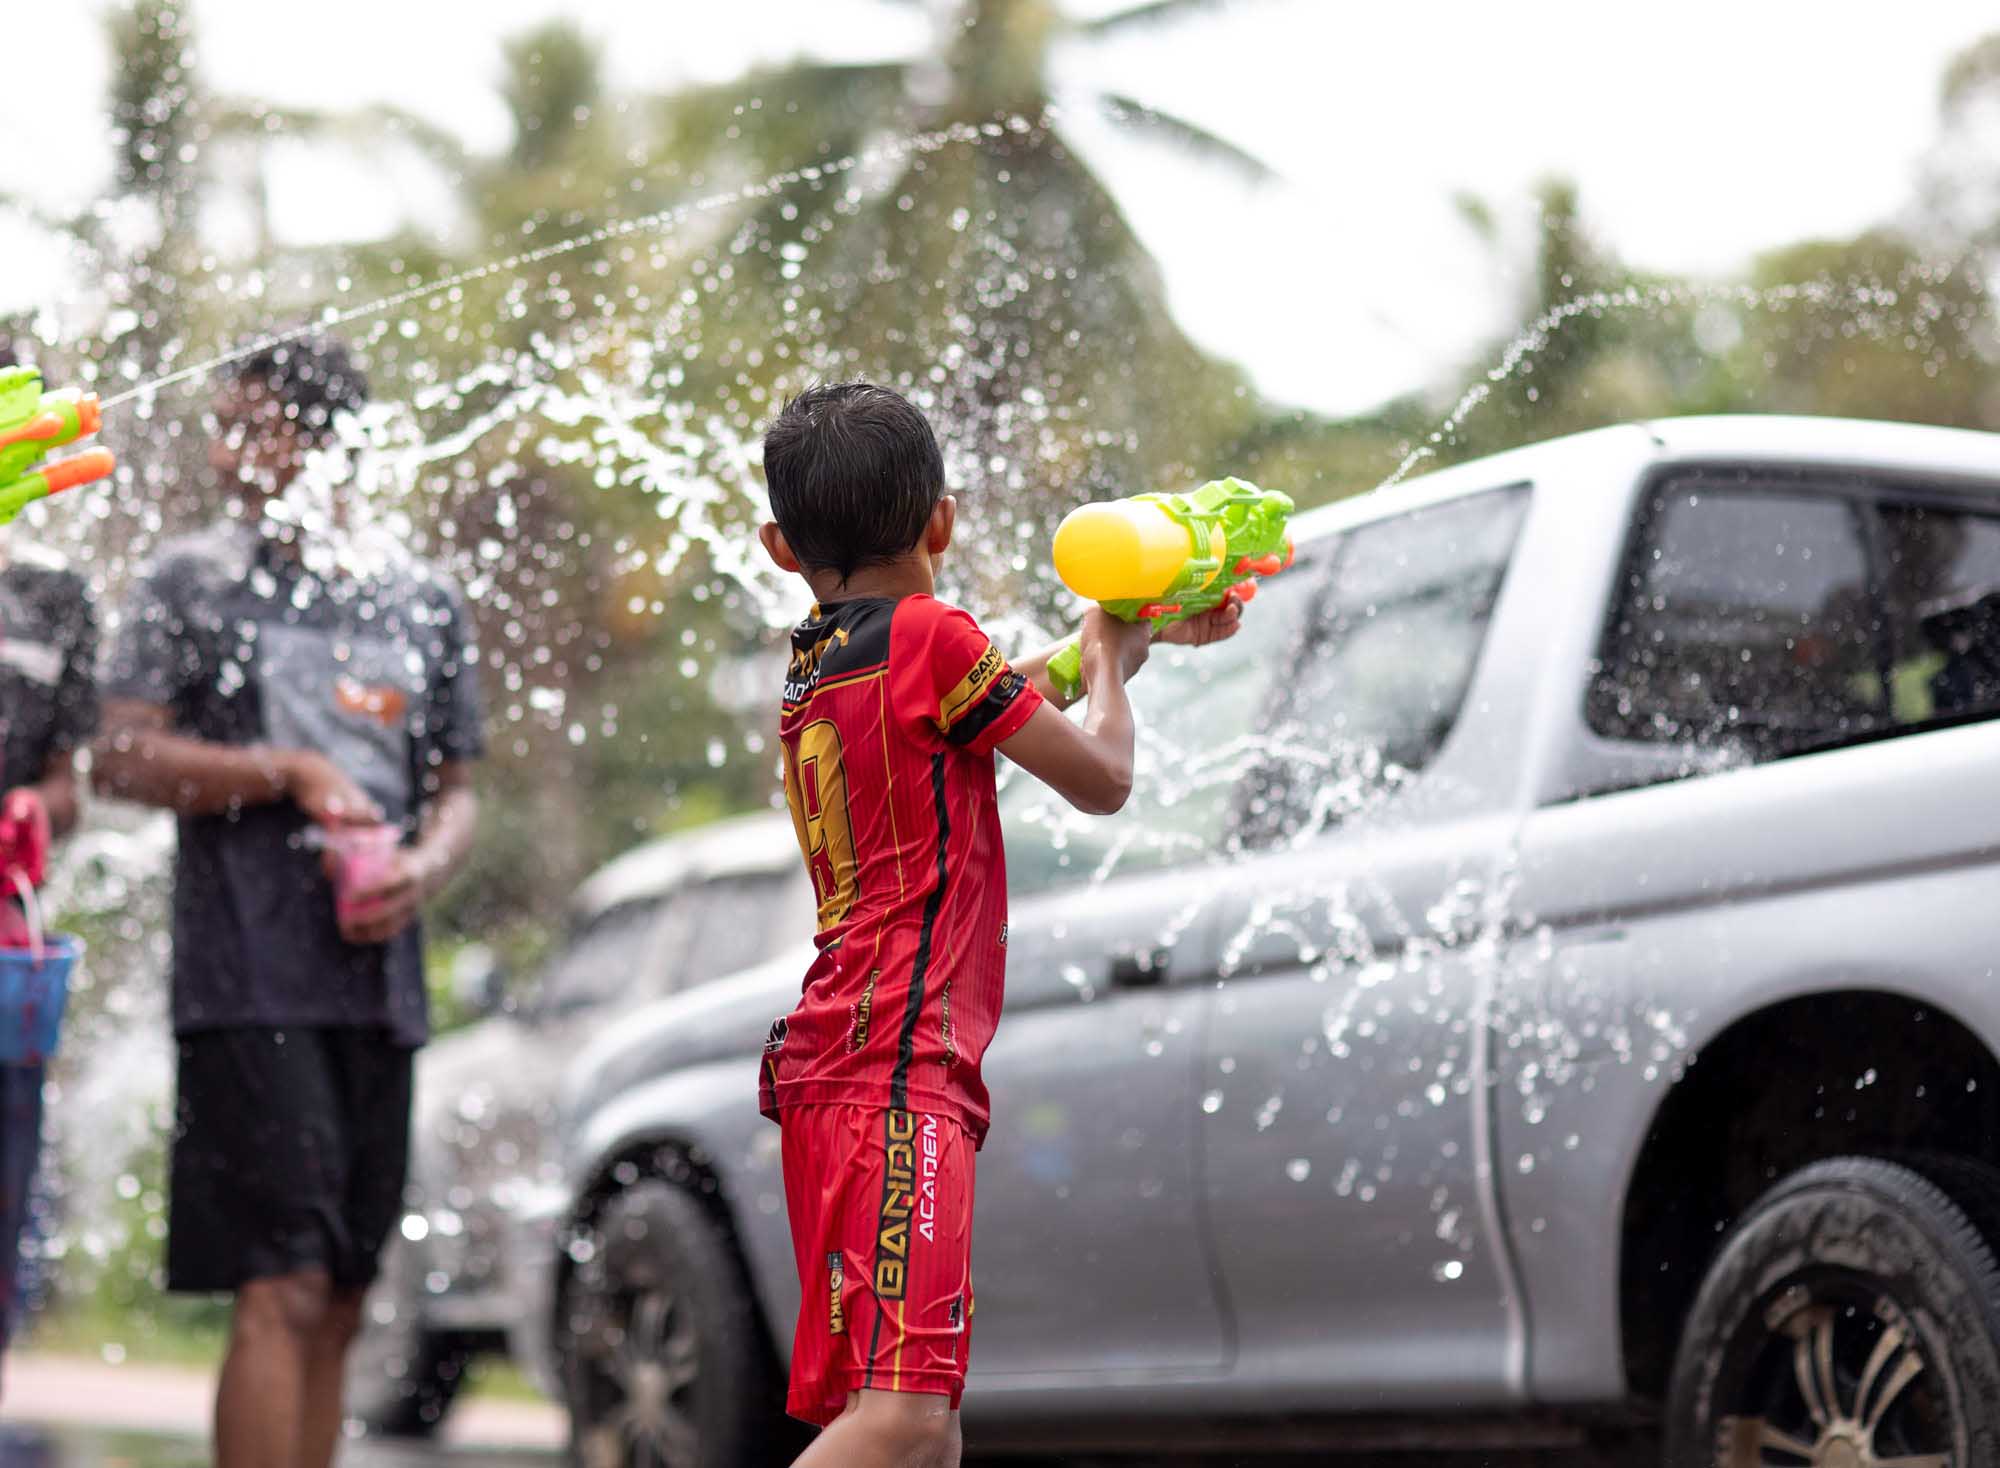 Boy shoots water gun at Songkran water festival in Phuket, Thailand | Travel Photography | Dramatic High Speed 